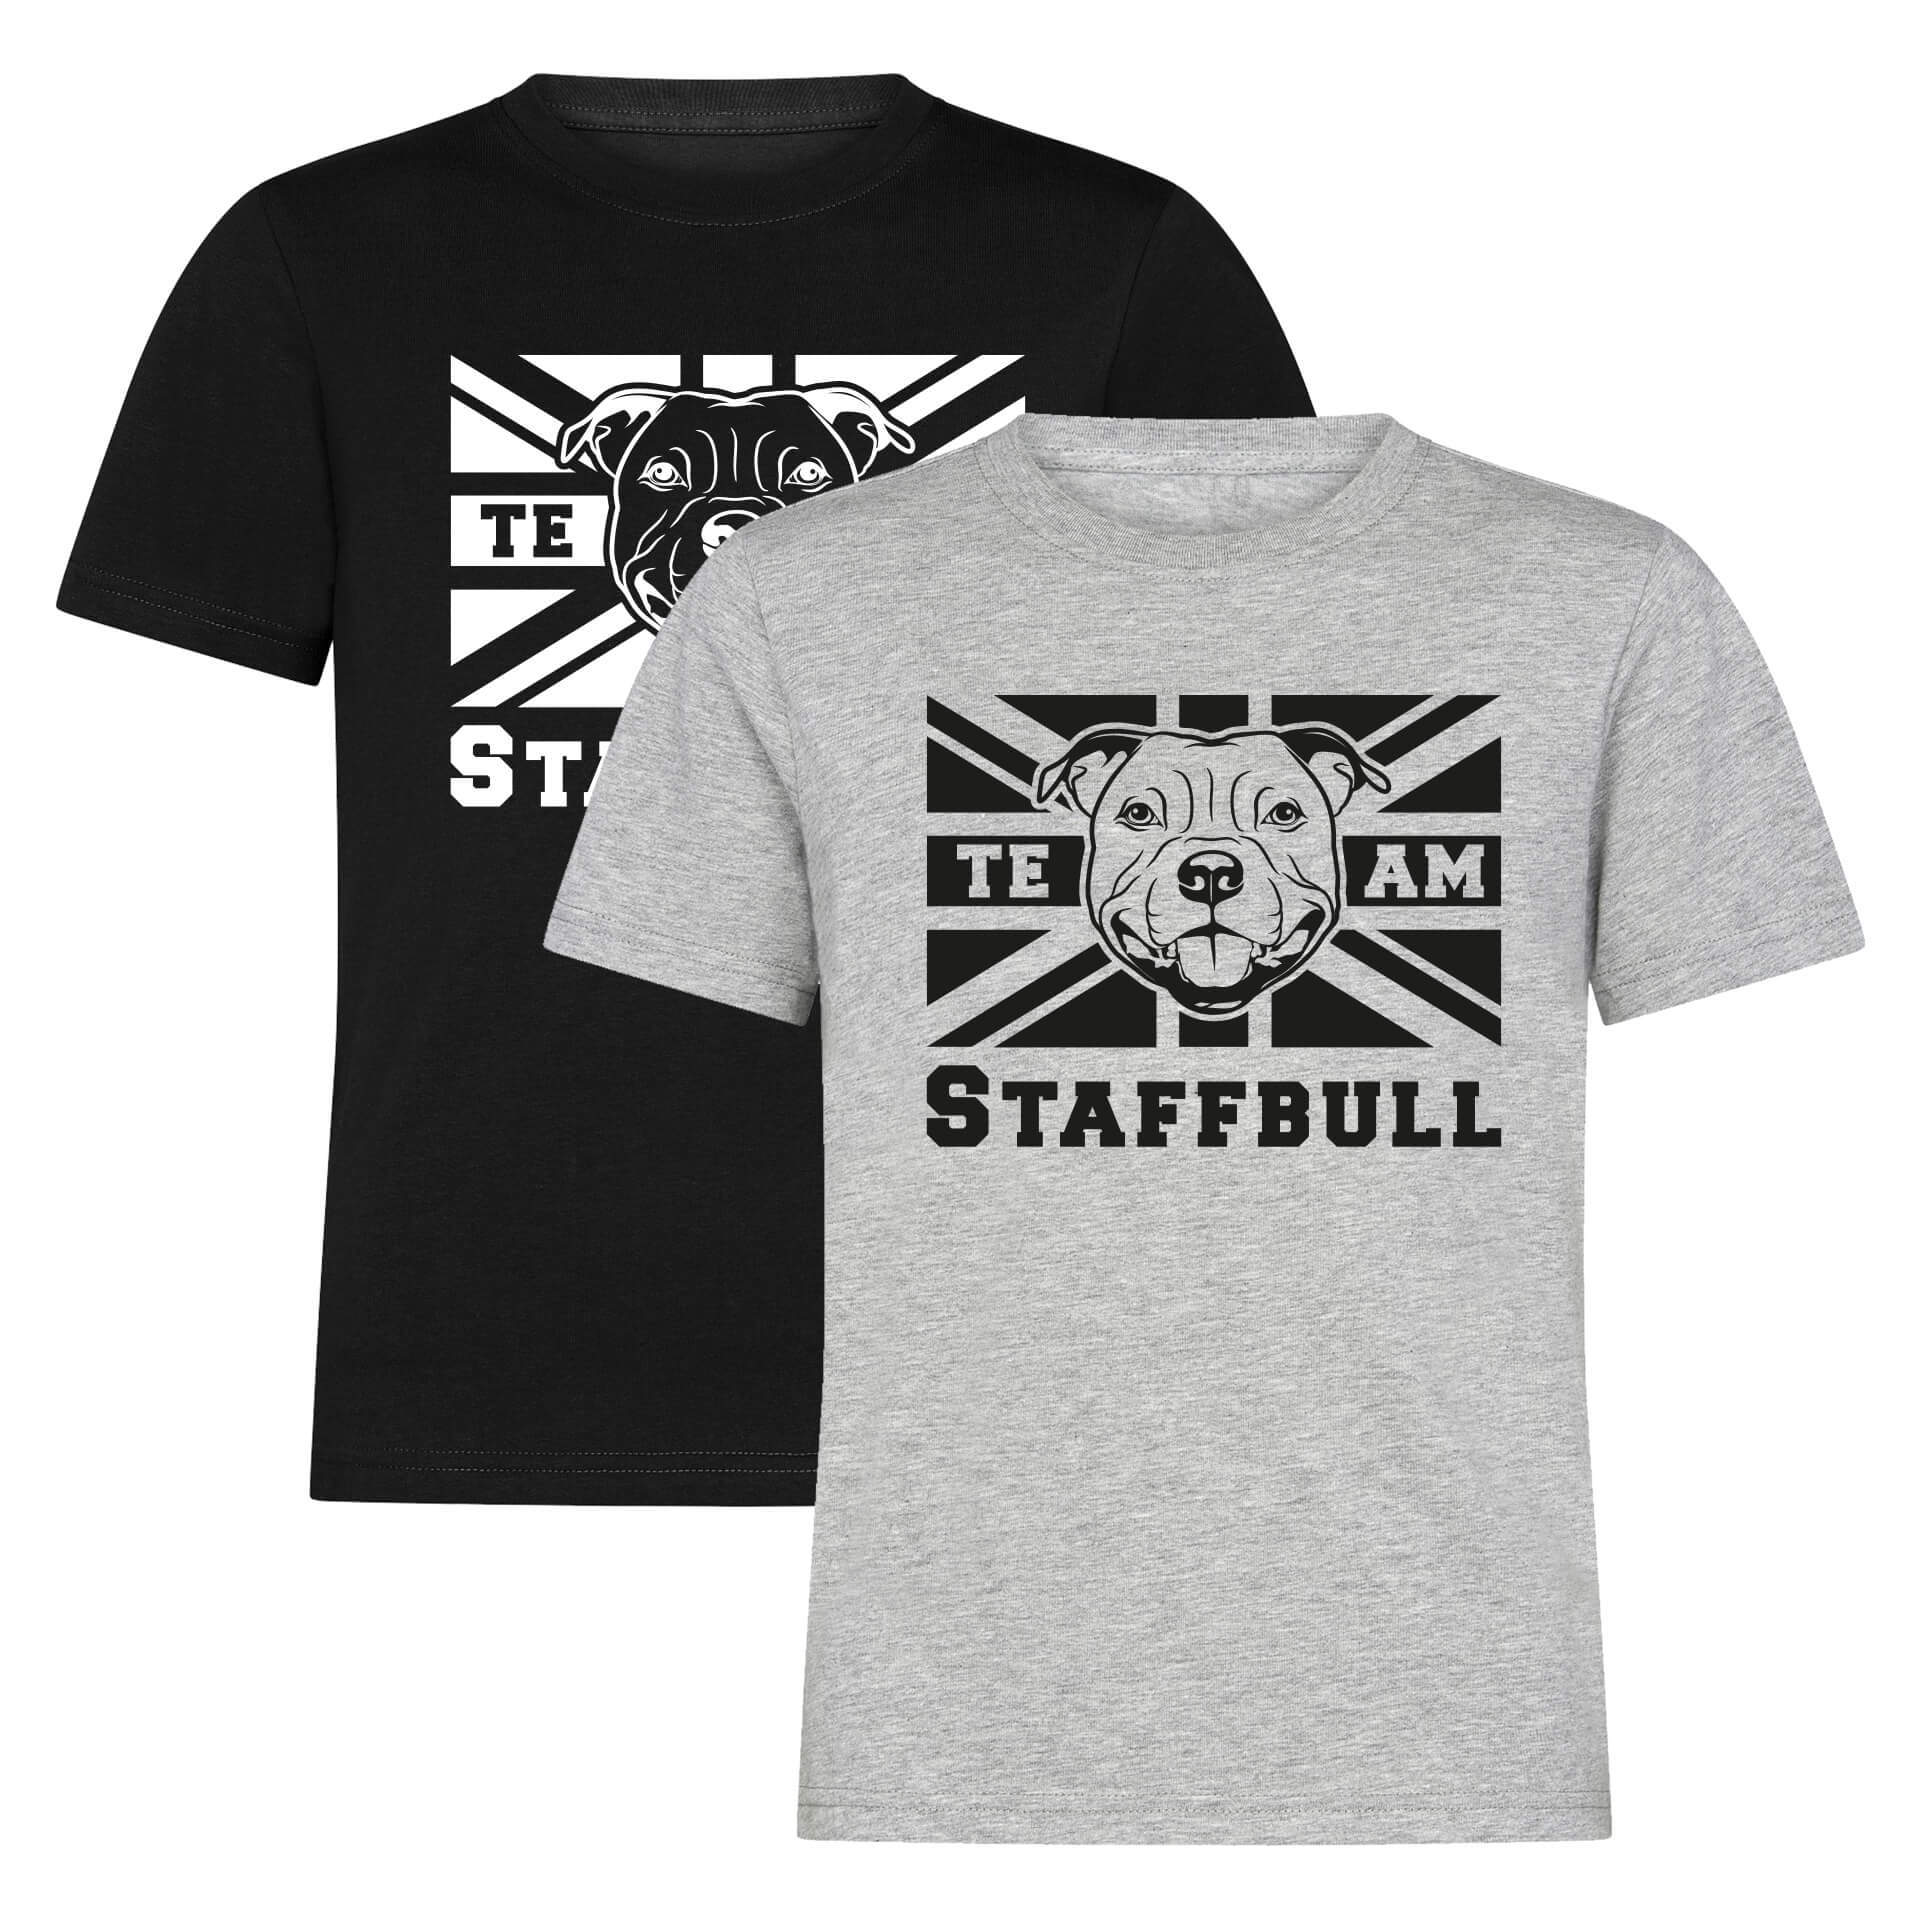 Staffbull T-Shirt Team